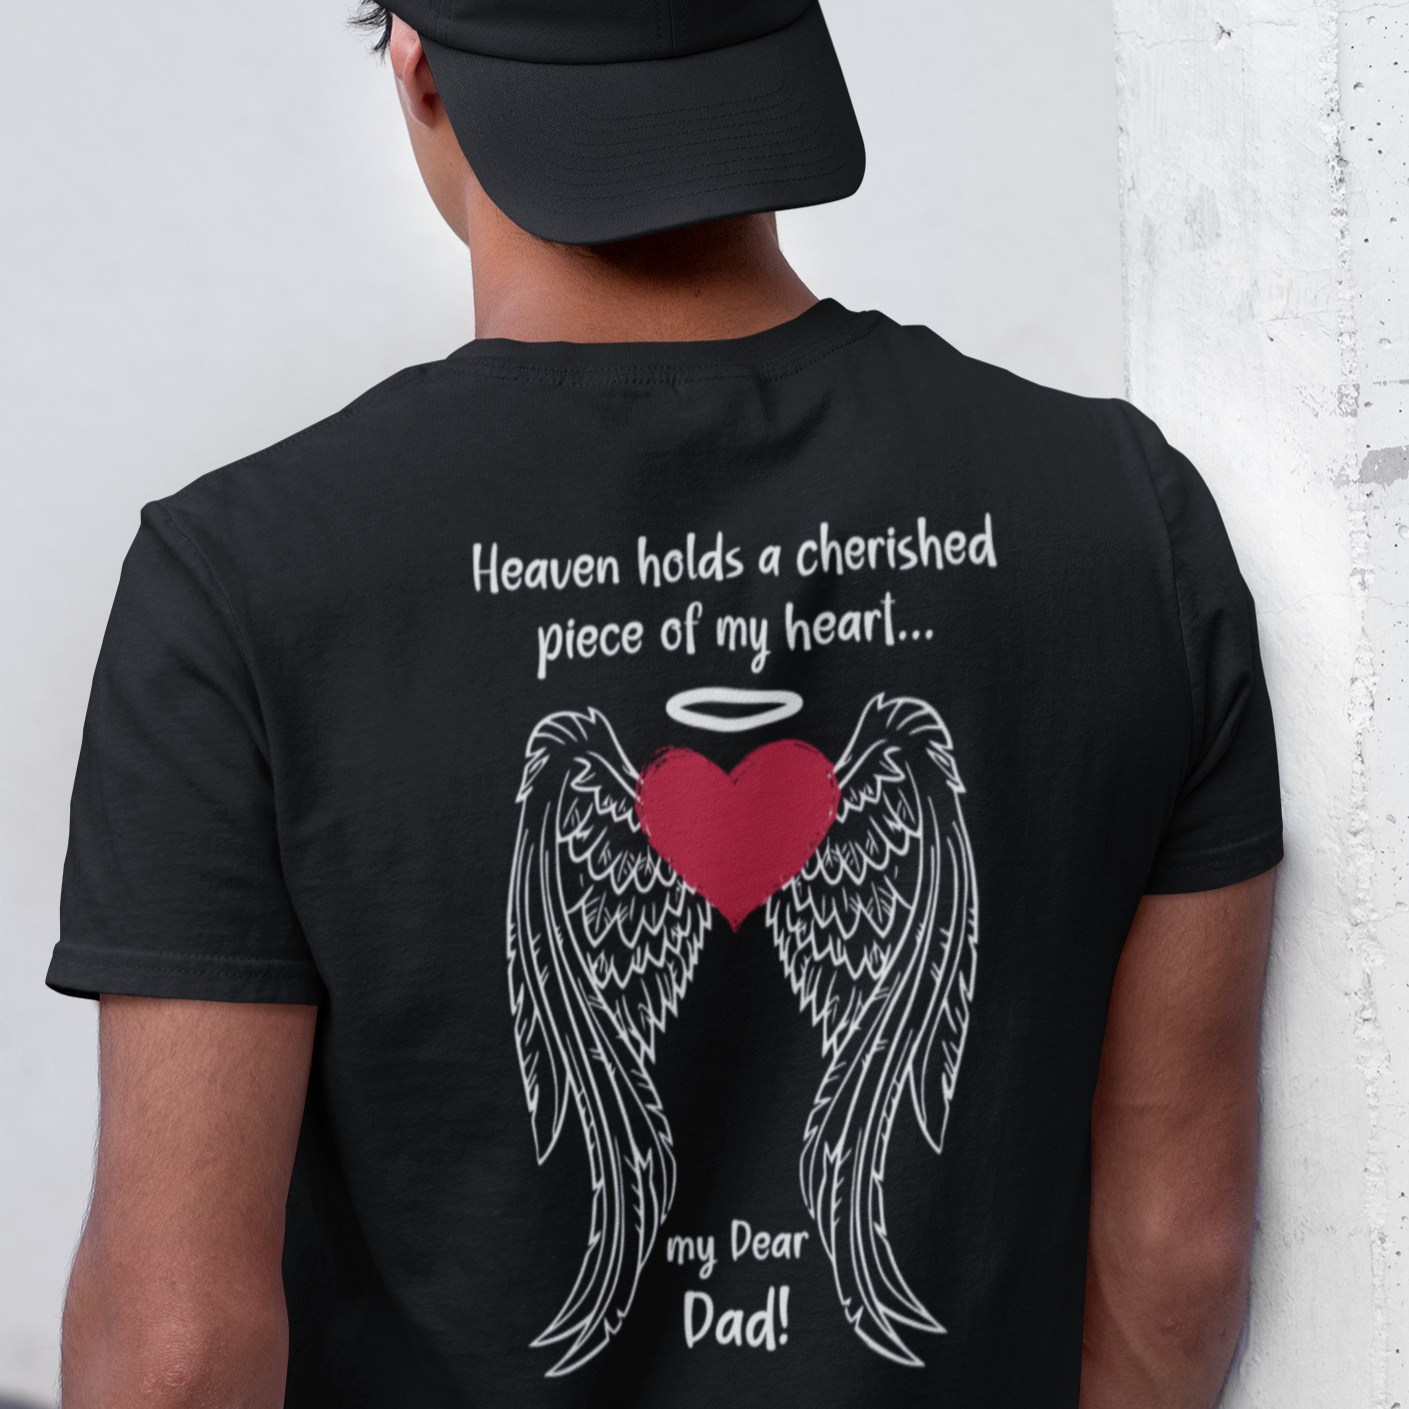 𝗗𝗔𝗗, HEAVENLY GUARDIAN - Unisex T-Shirt